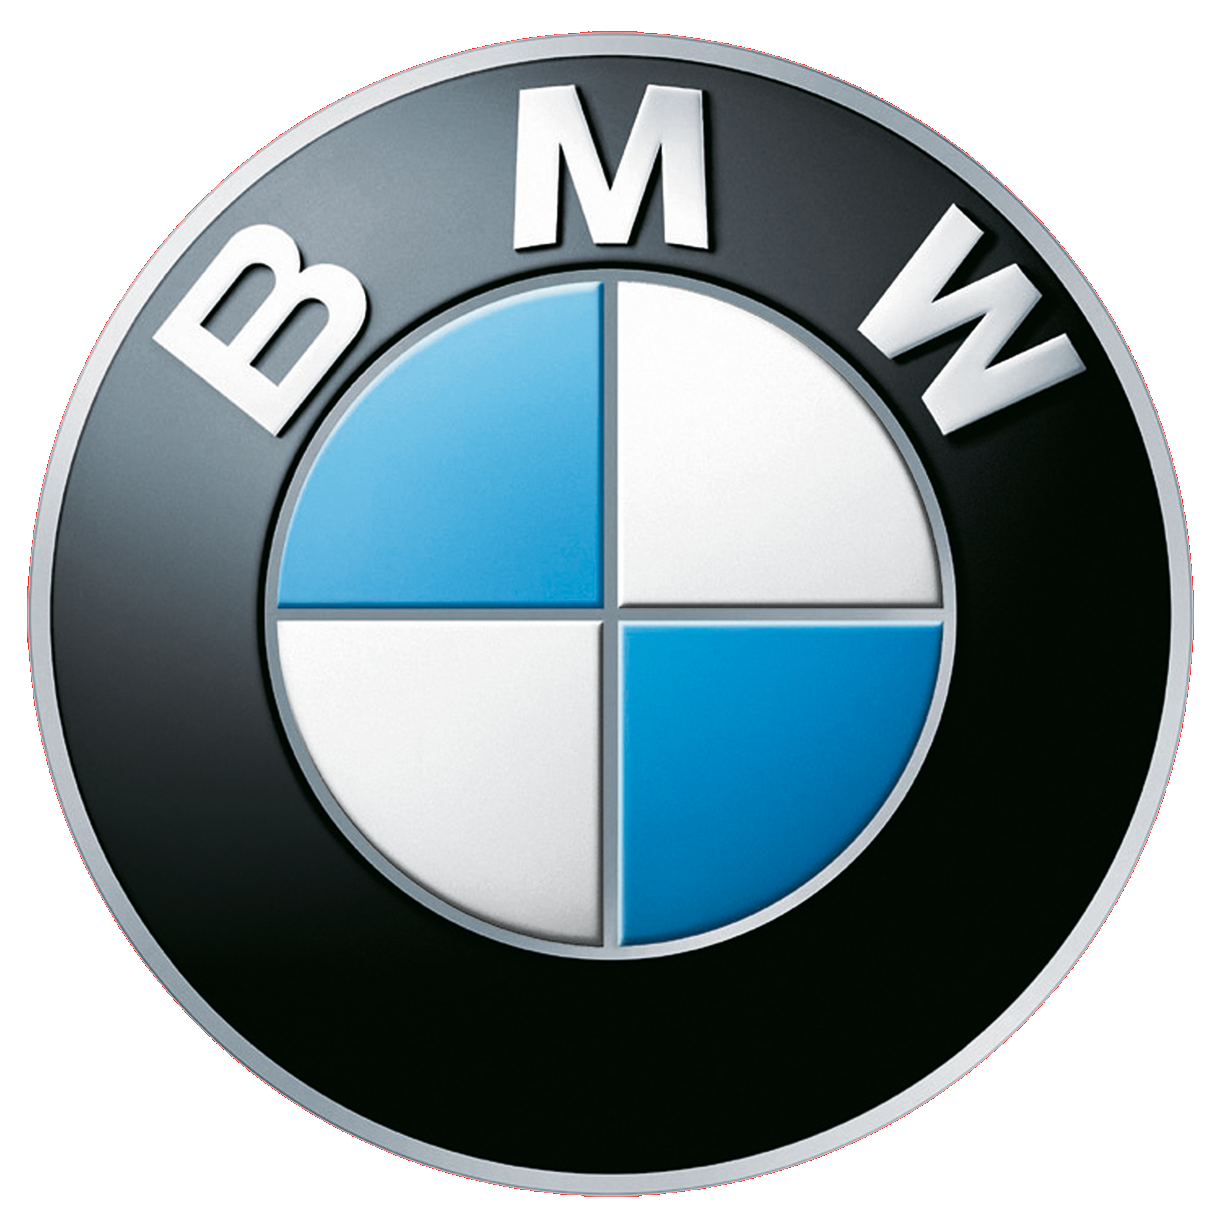 Logo Car I3 M1 Bmw Cars Brands Clipart